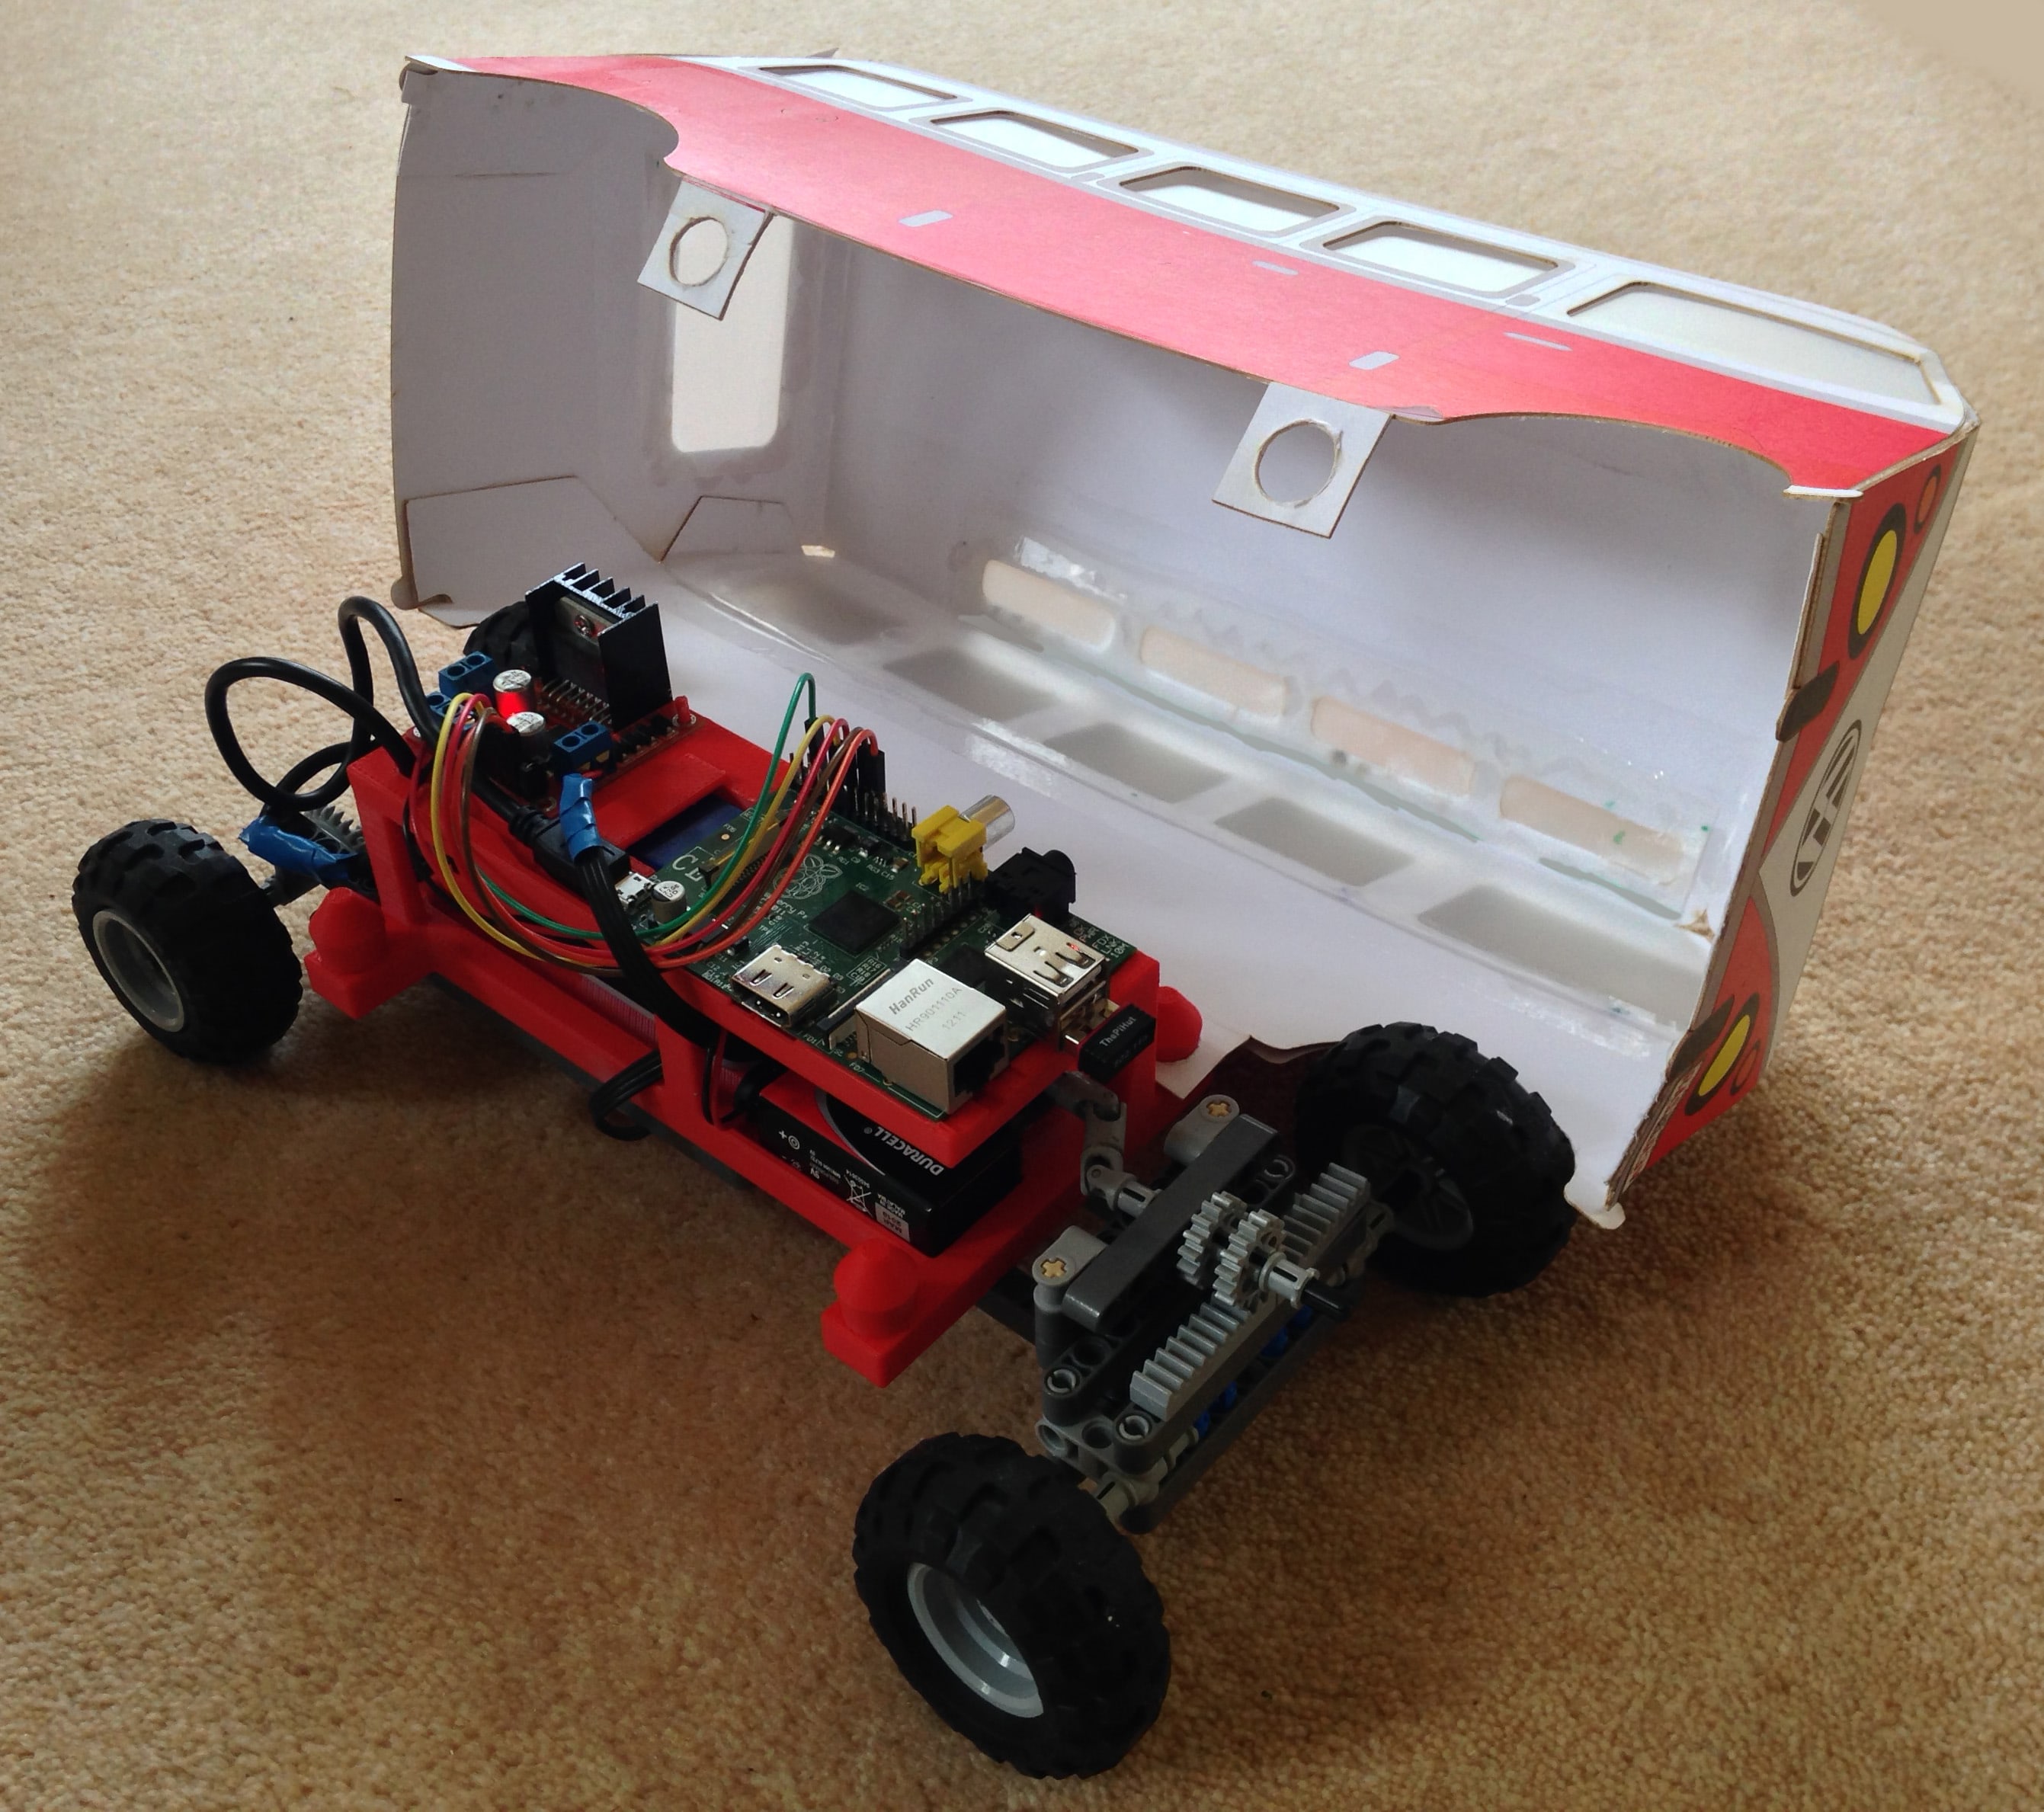 raspberry rev remote control car with raspberry pi